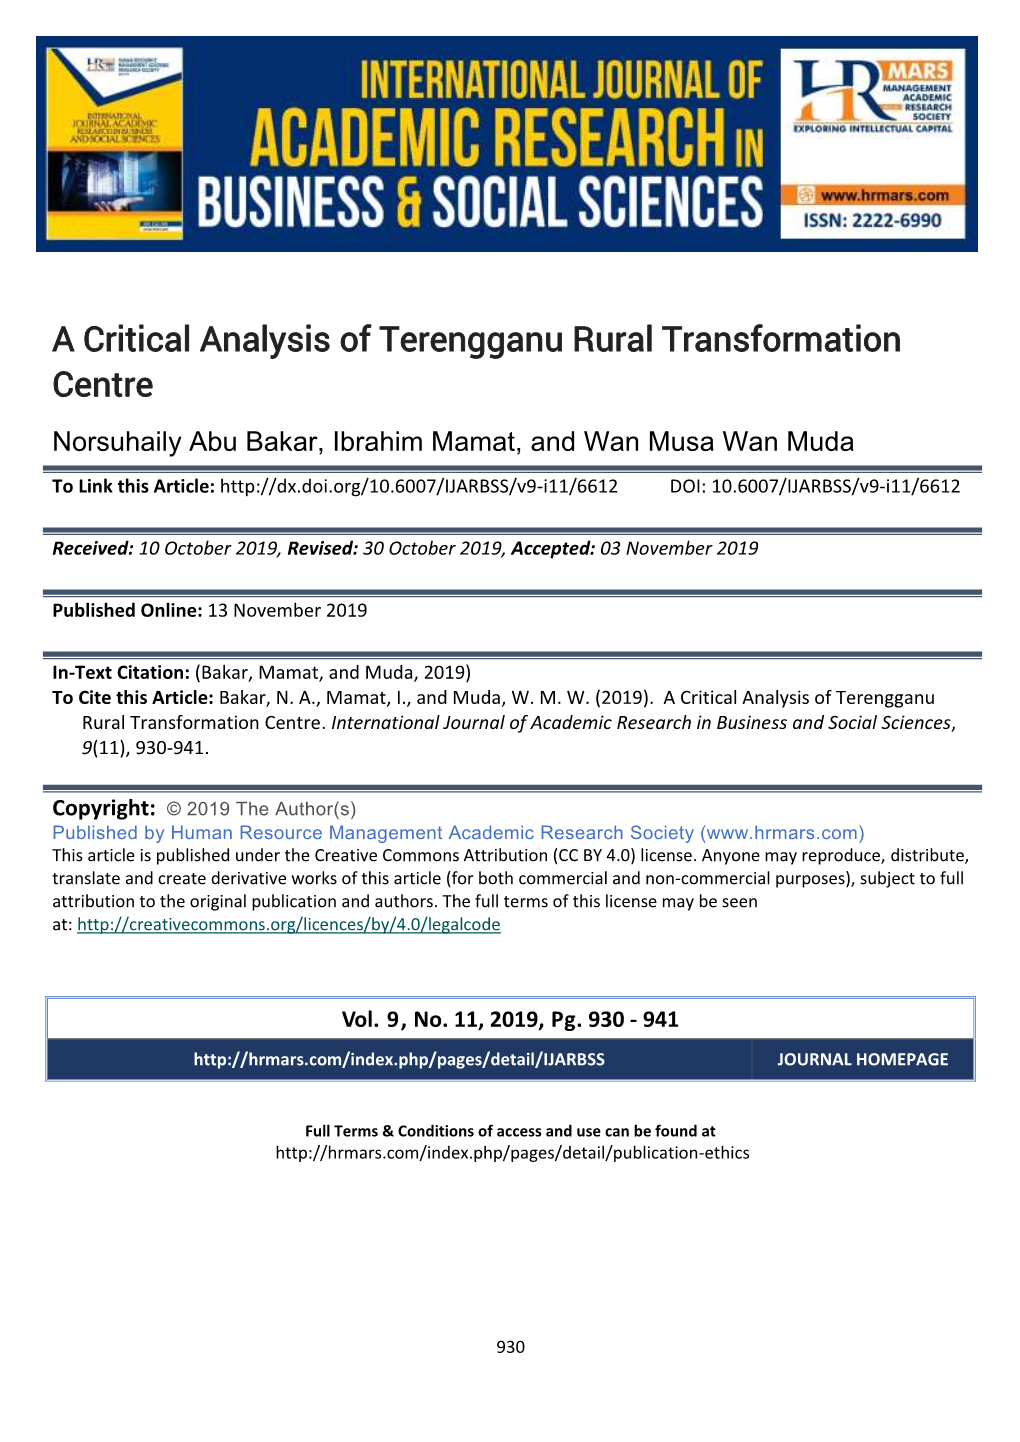 A Critical Analysis of Terengganu Rural Transformation Centre